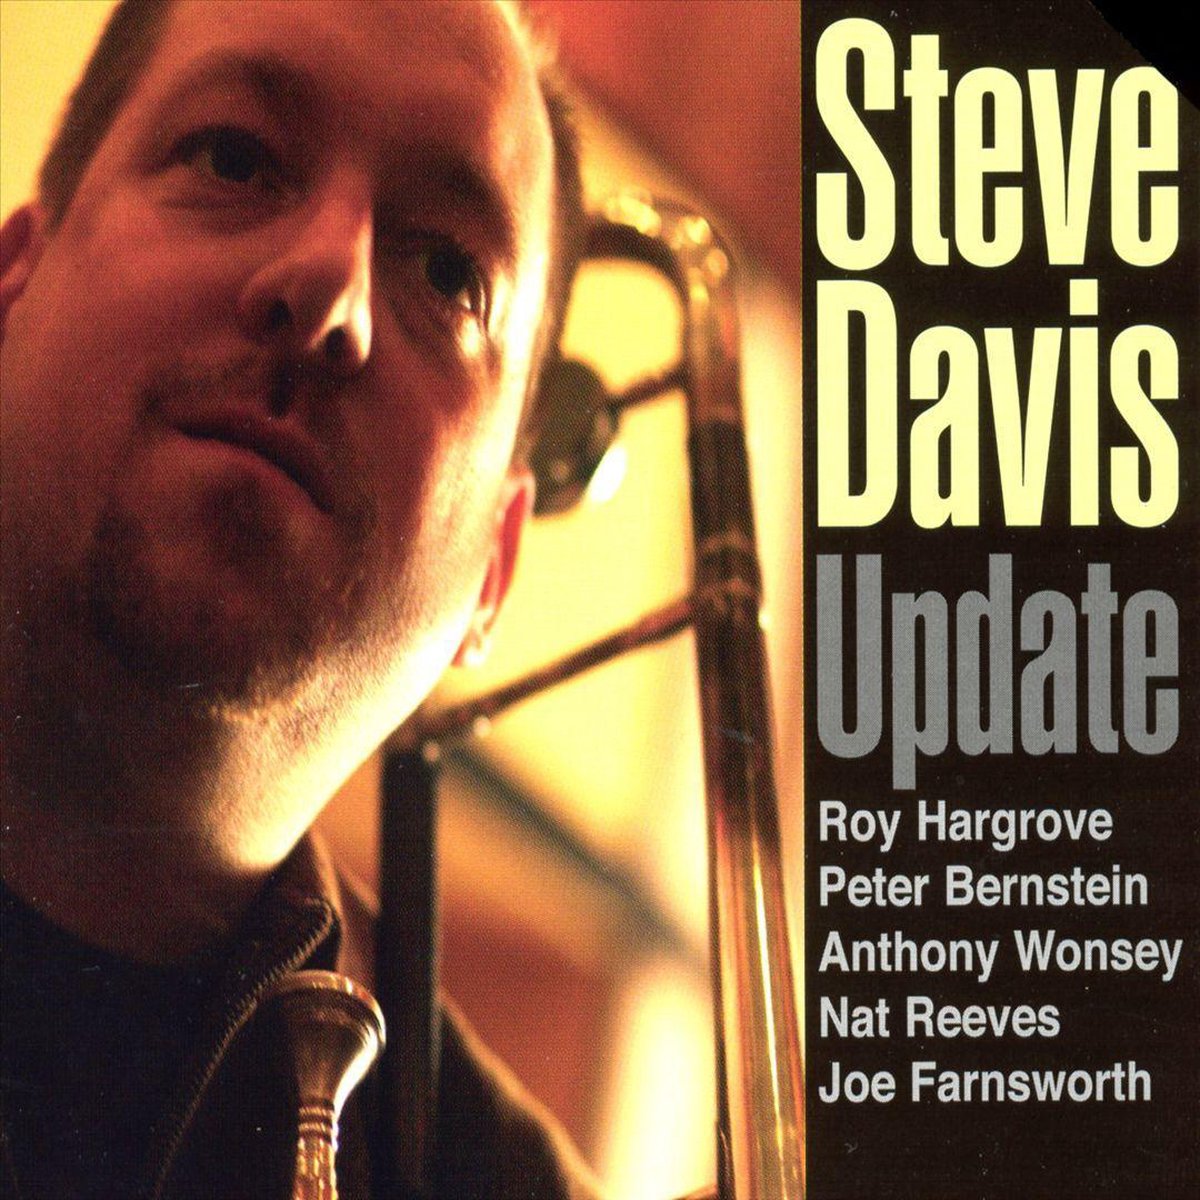 Update - Steve Davis